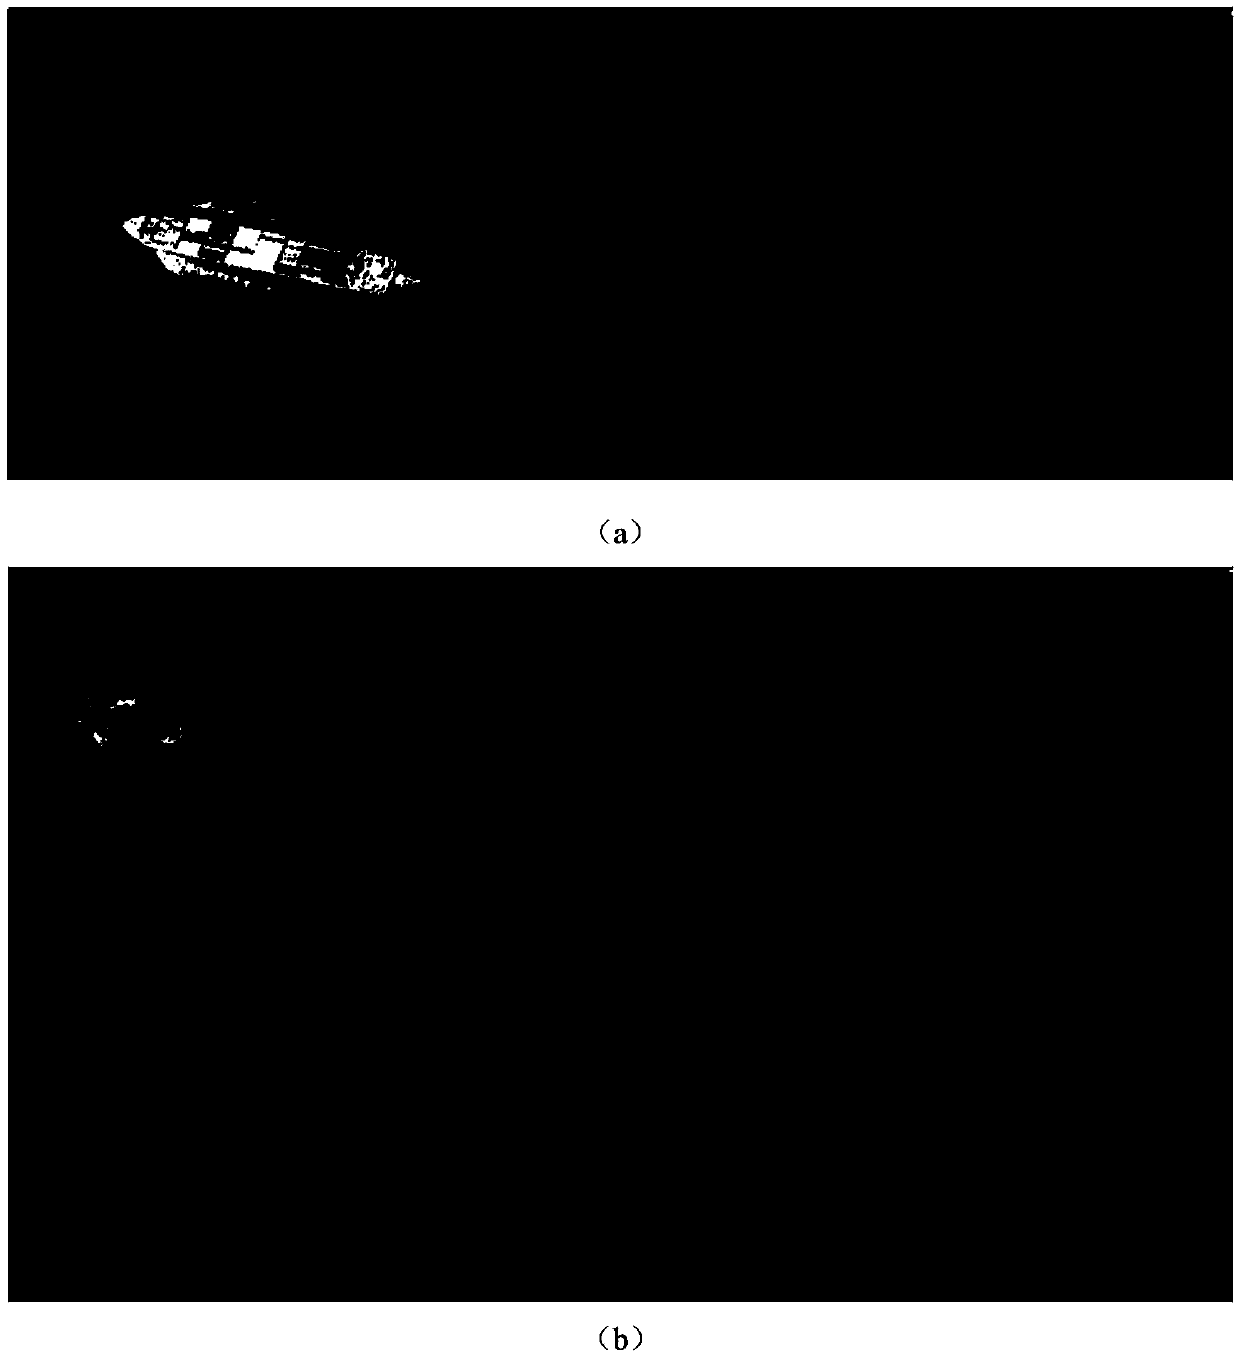 Ship speed detection method based on visible light remote-sensing images